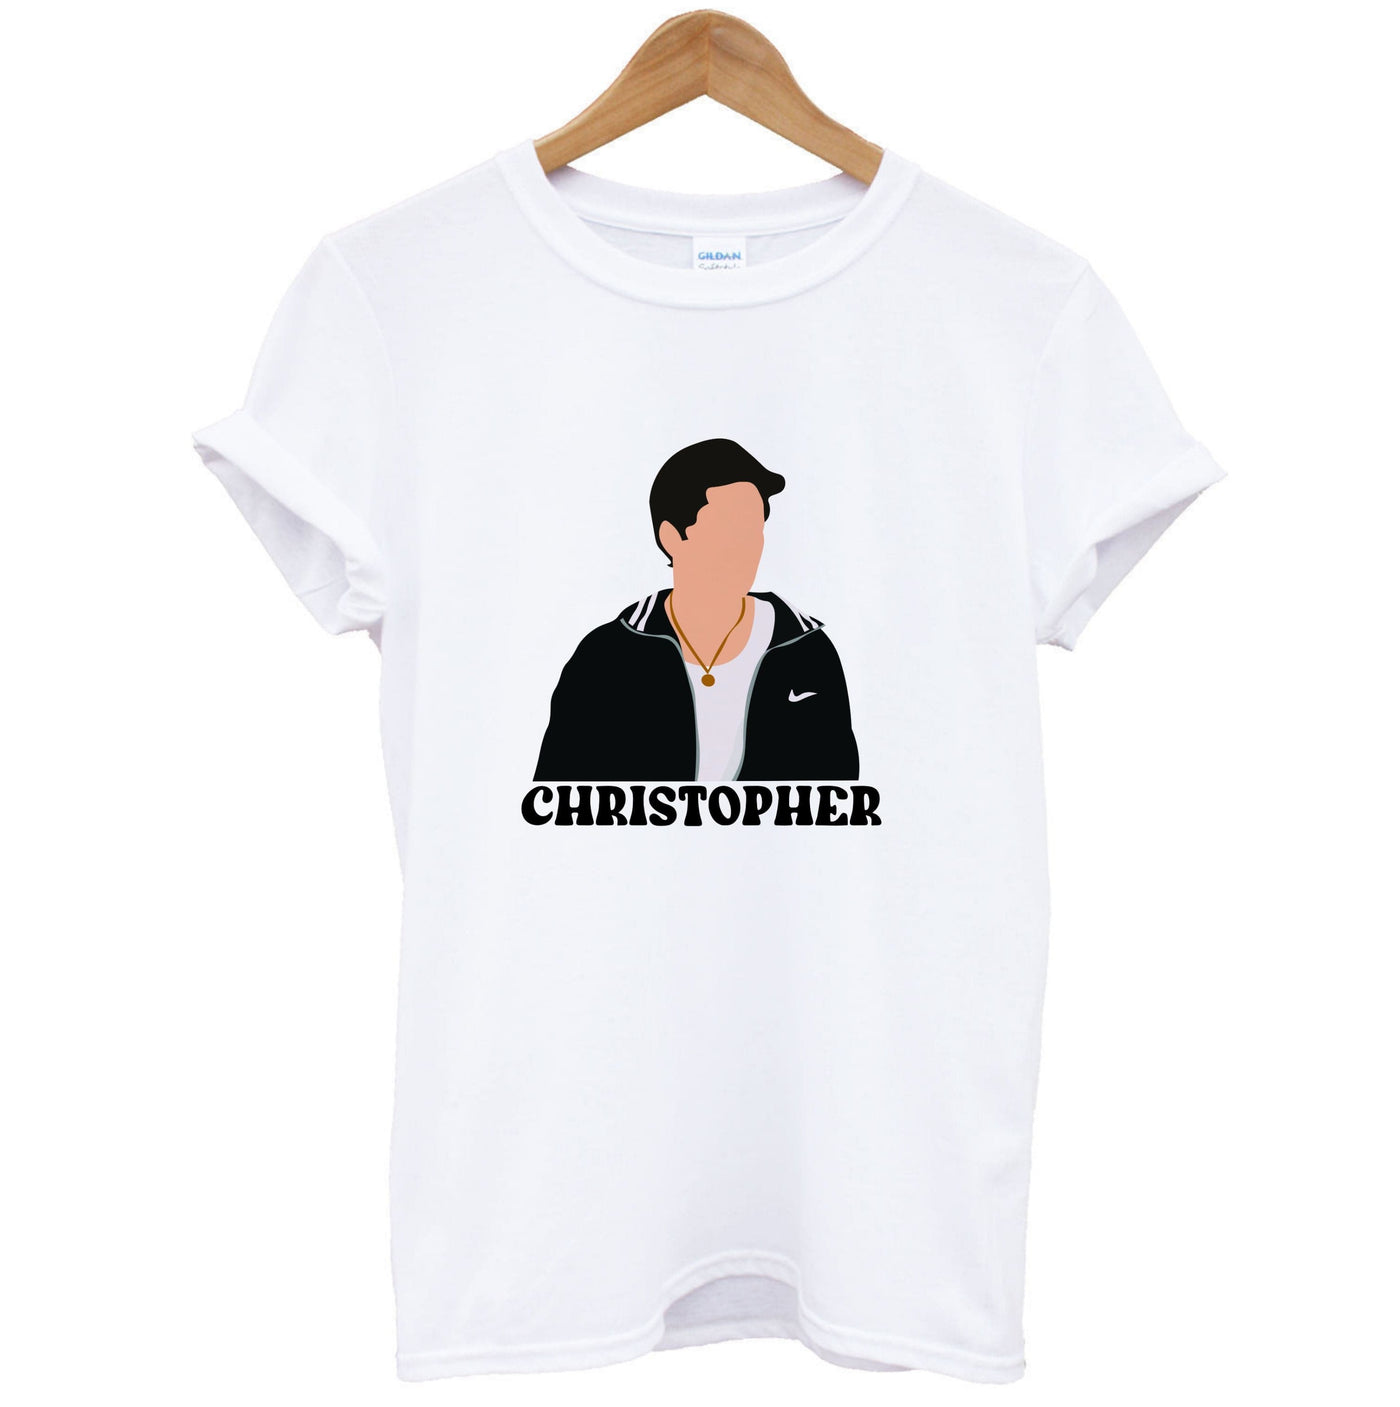 Cristopher - The Sopranos T-Shirt